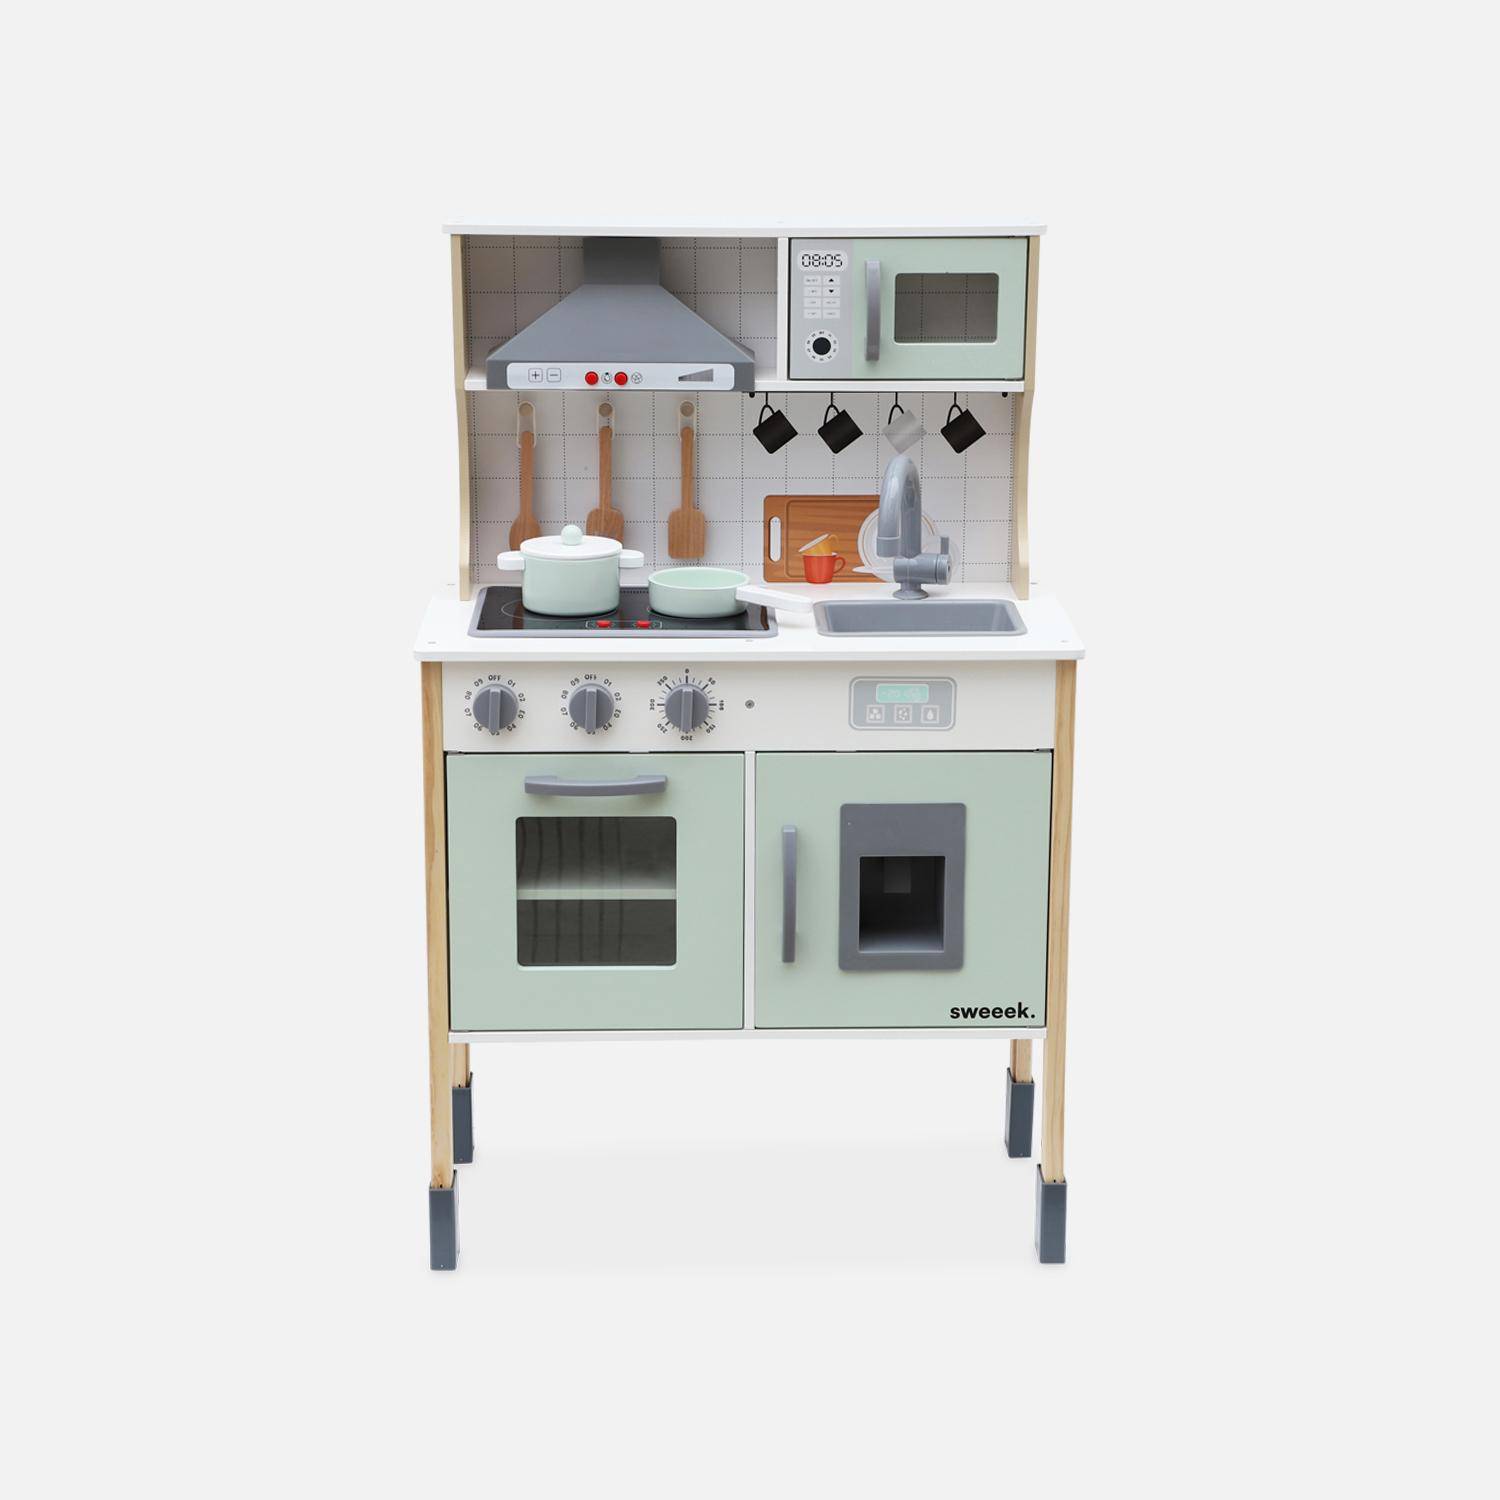 Panel de cocina infantil, accesorios incluidos, campana, placa de cocción, microondas electrónico Photo6